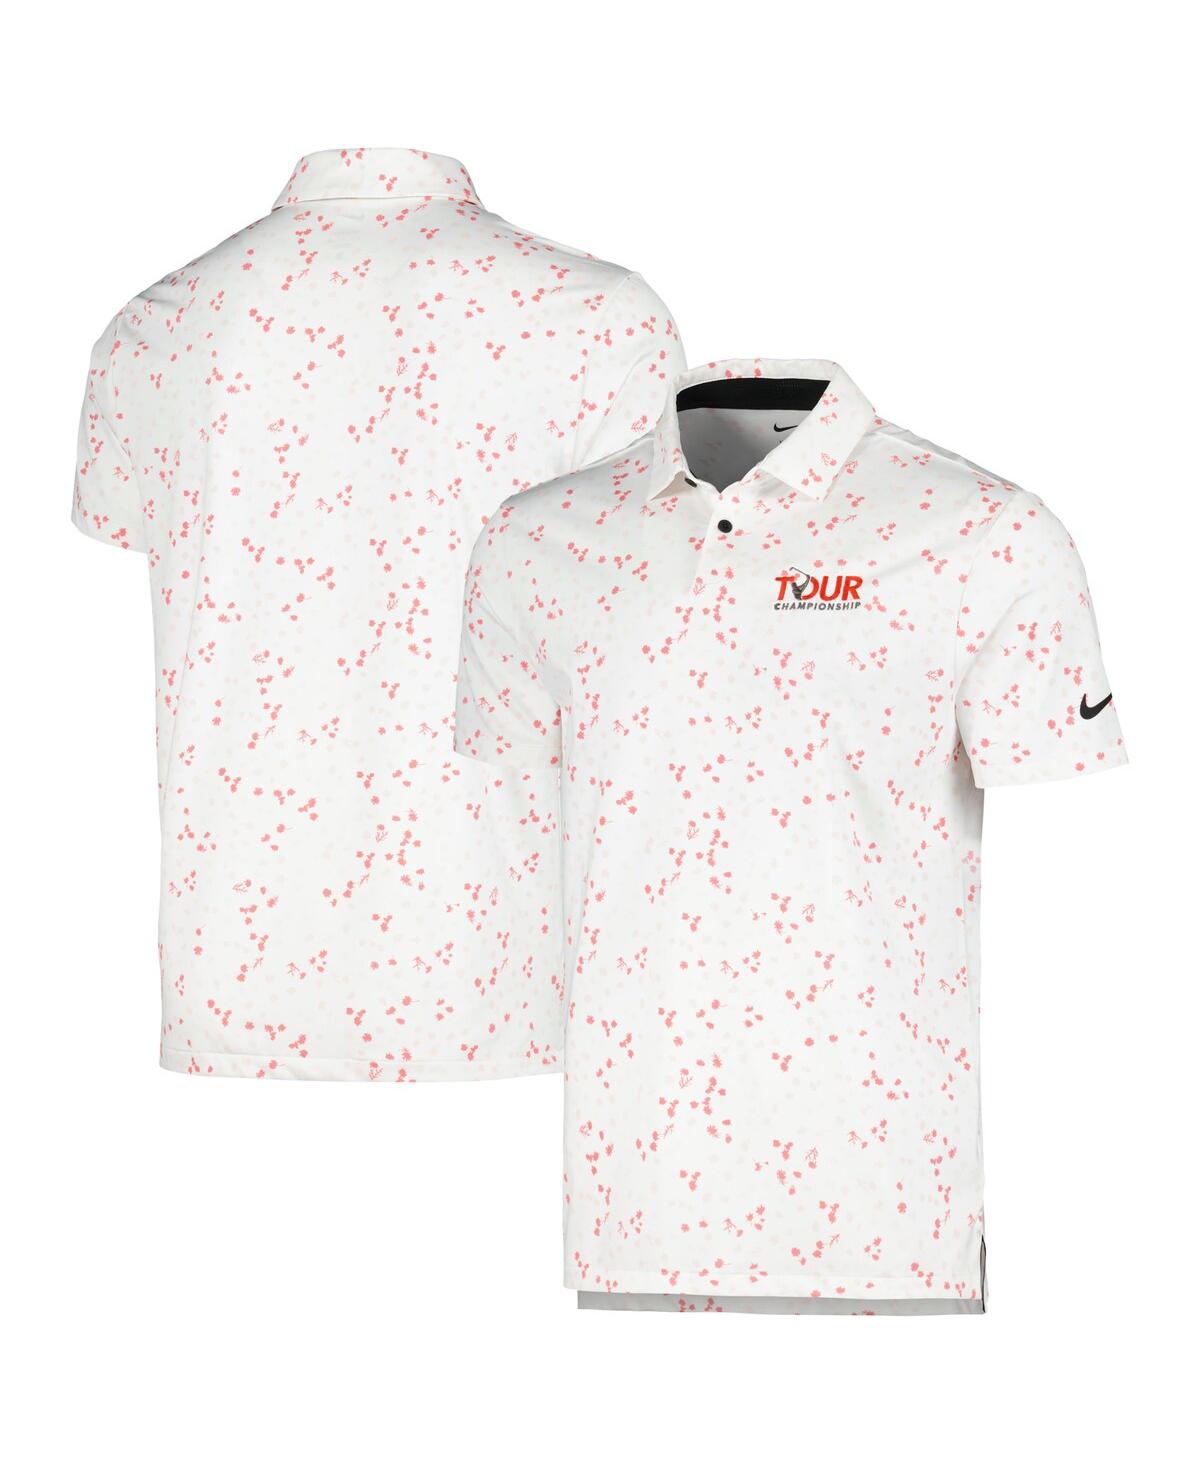 Shop Nike Men's  White Tour Championship Tour Floral Performance Polo